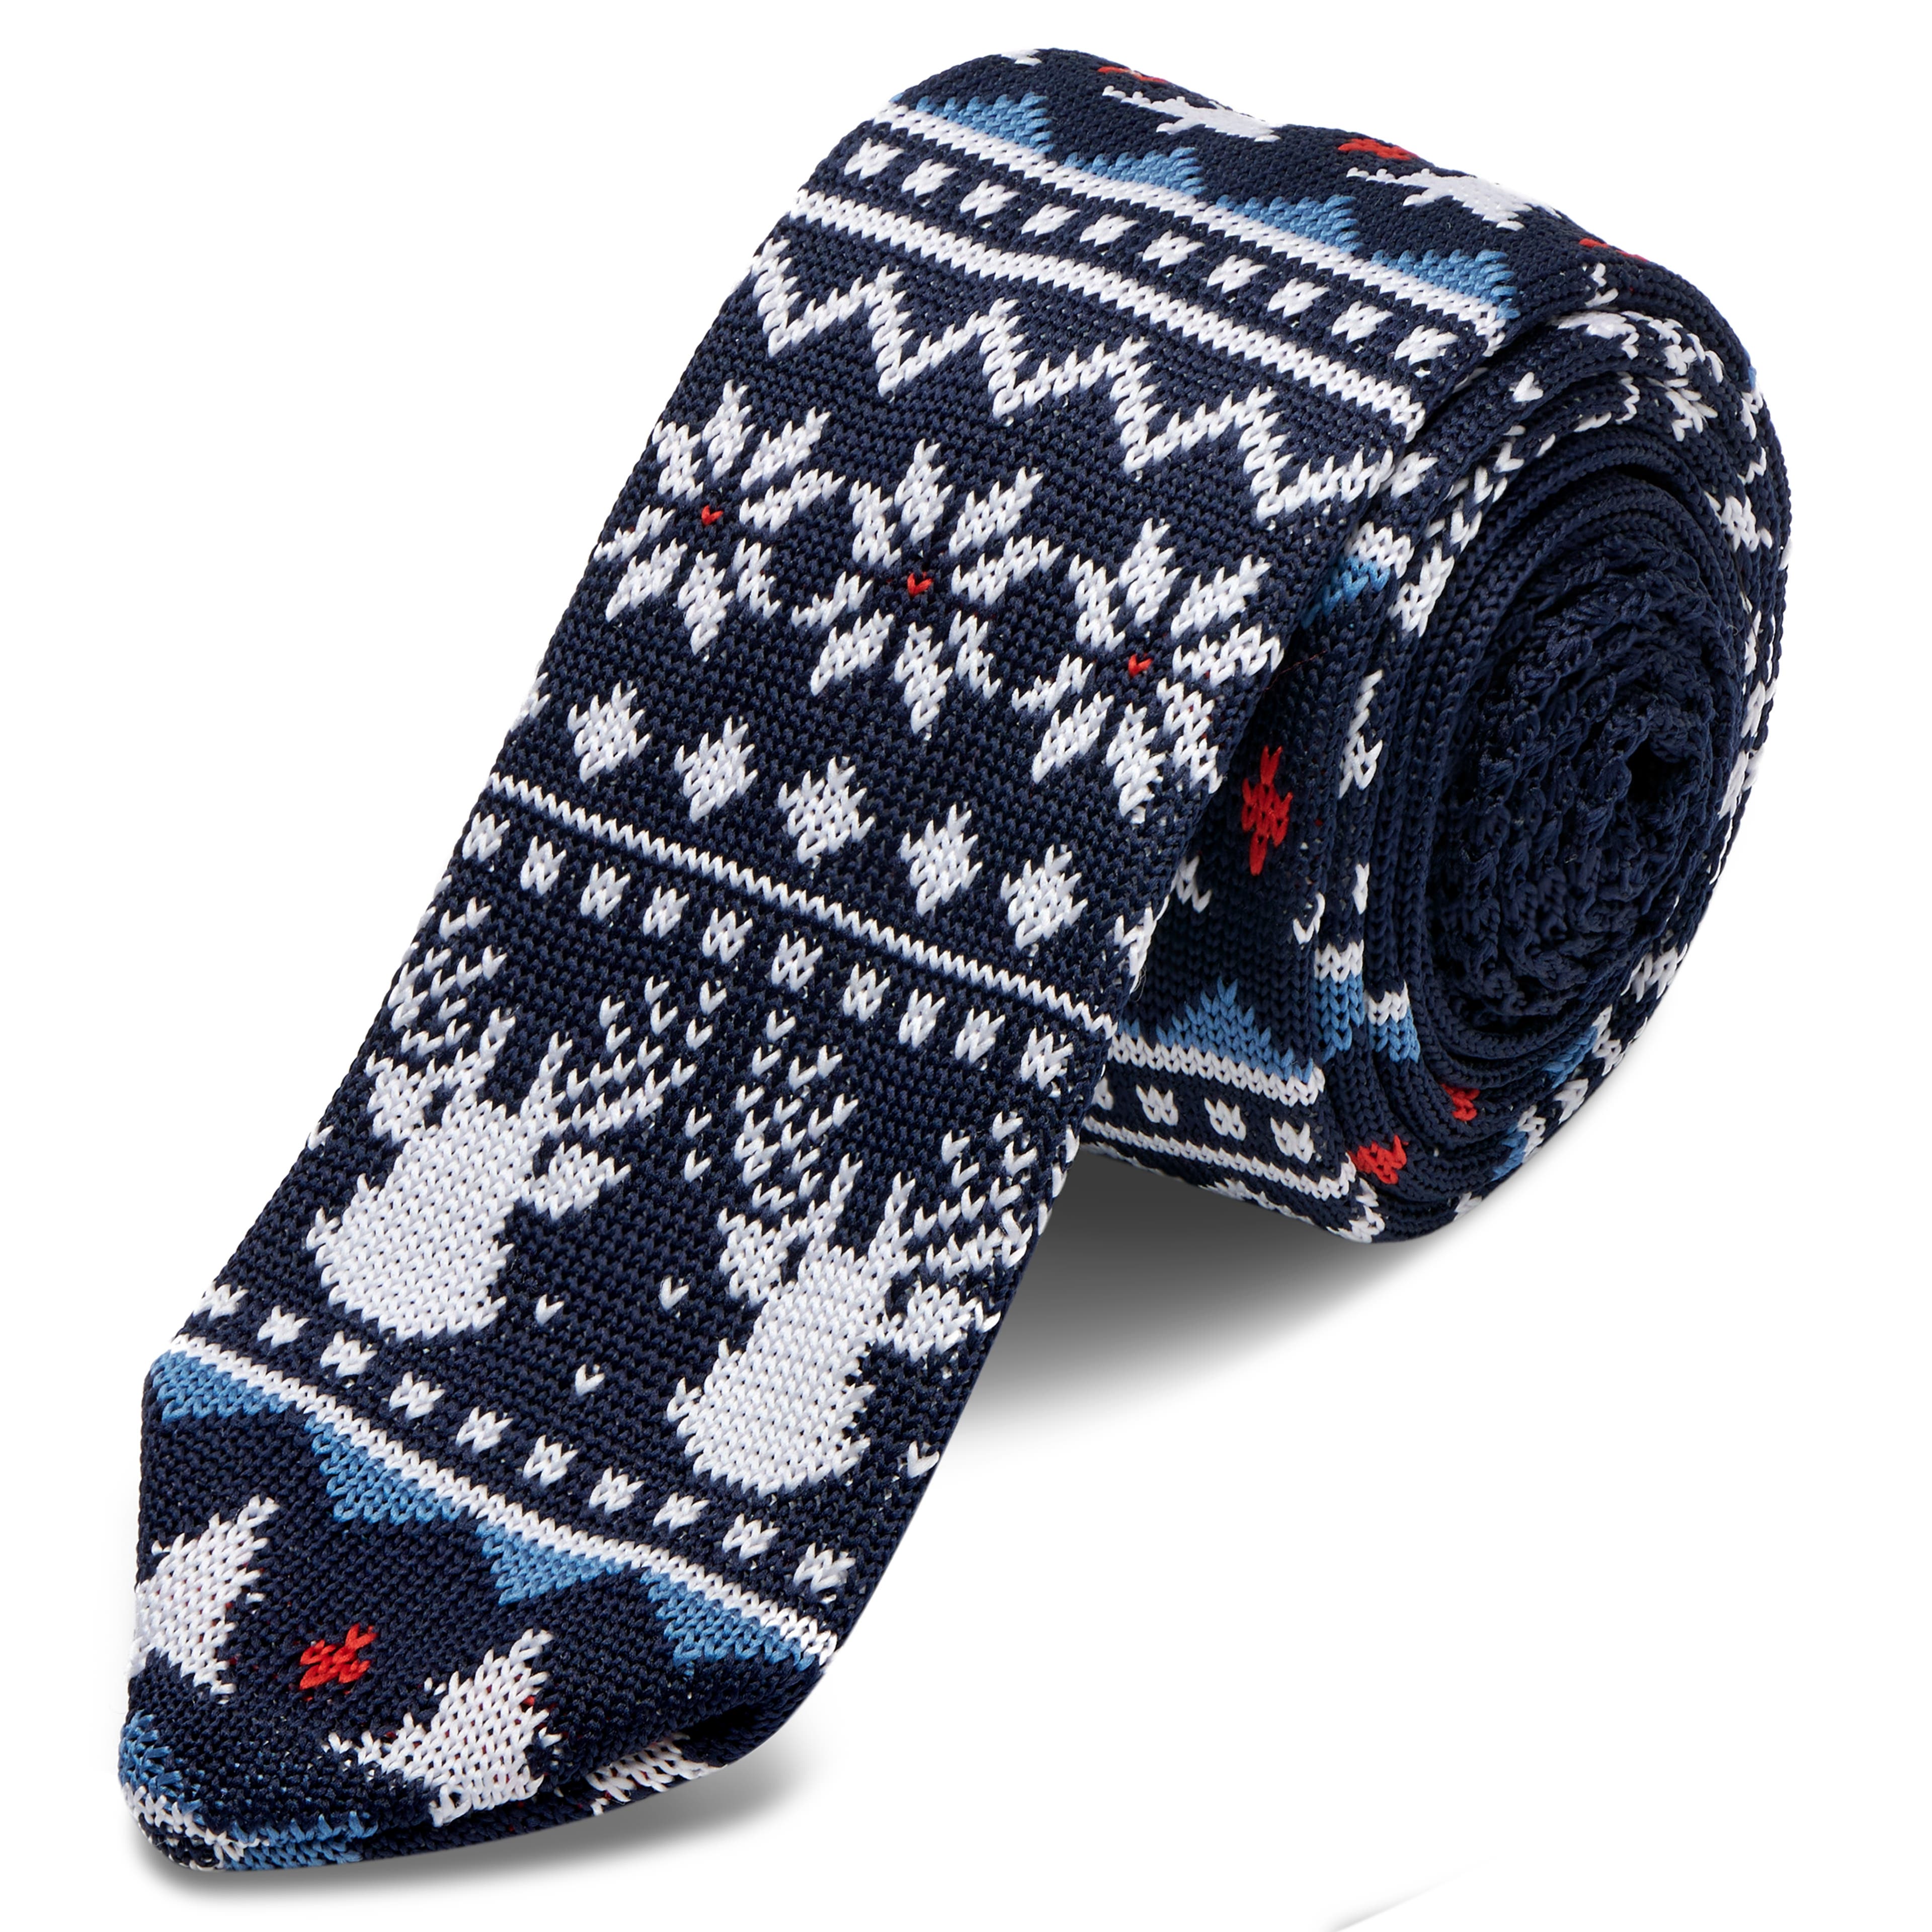 Pletená kravata so vzorom vianočného svetru v tmavomodrej farbe 